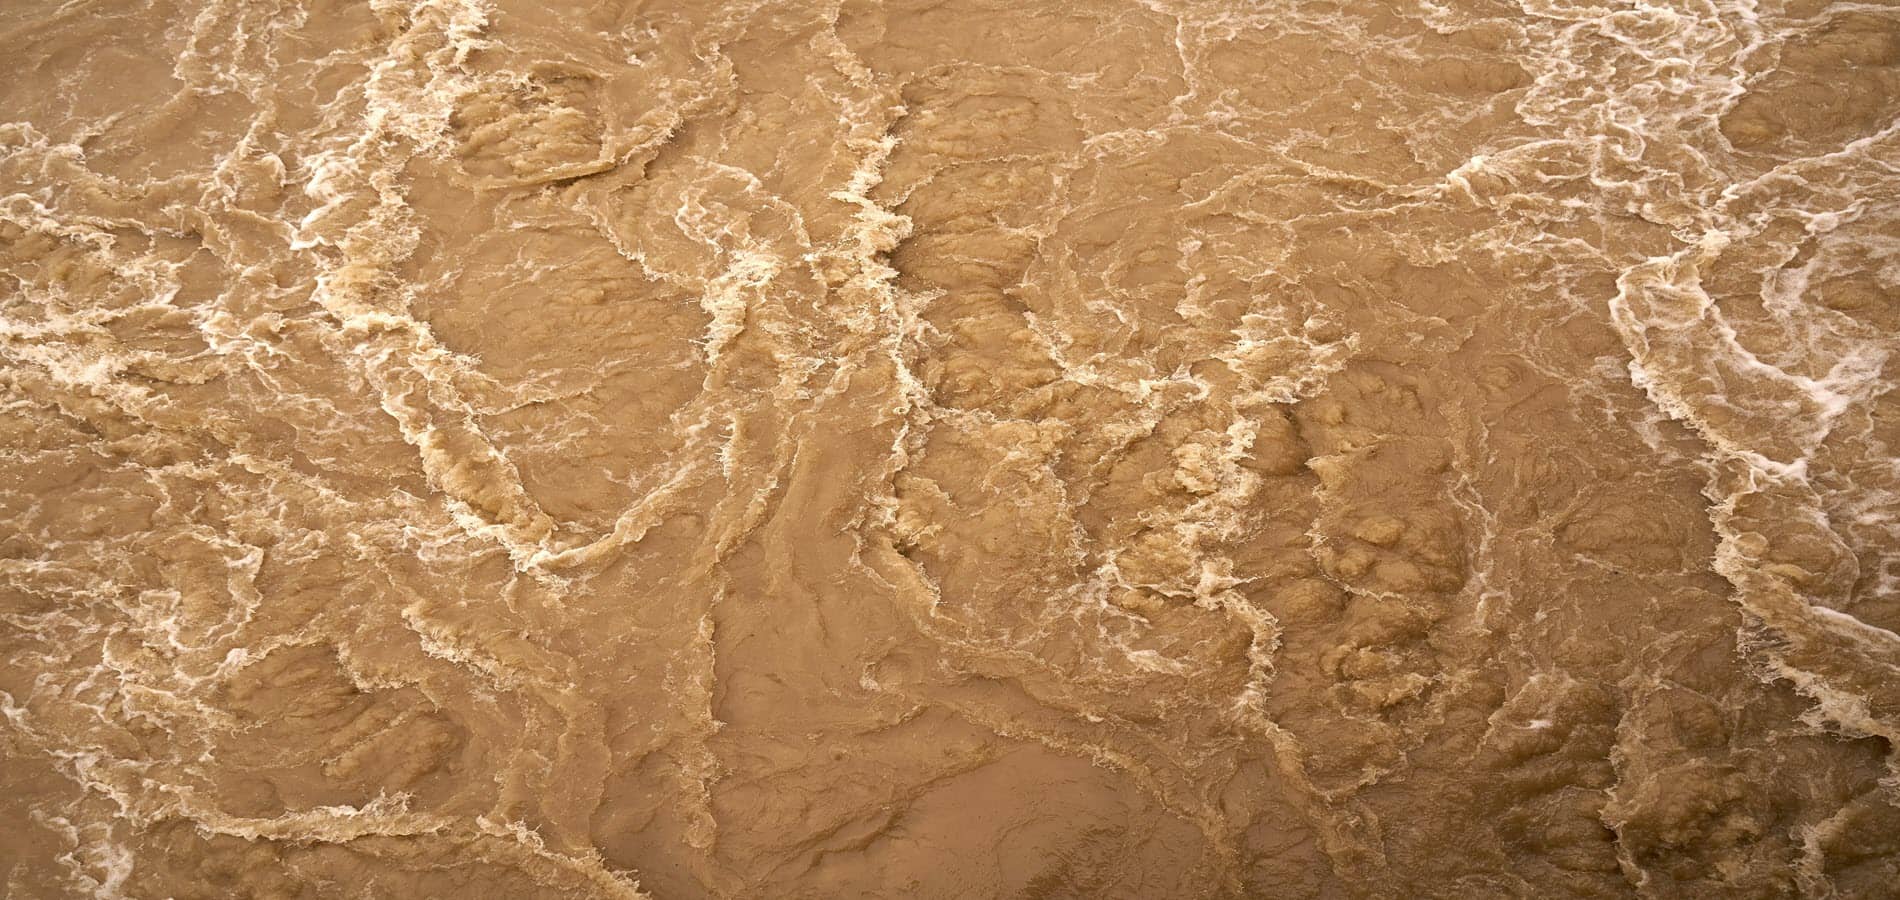 Swirling brown water